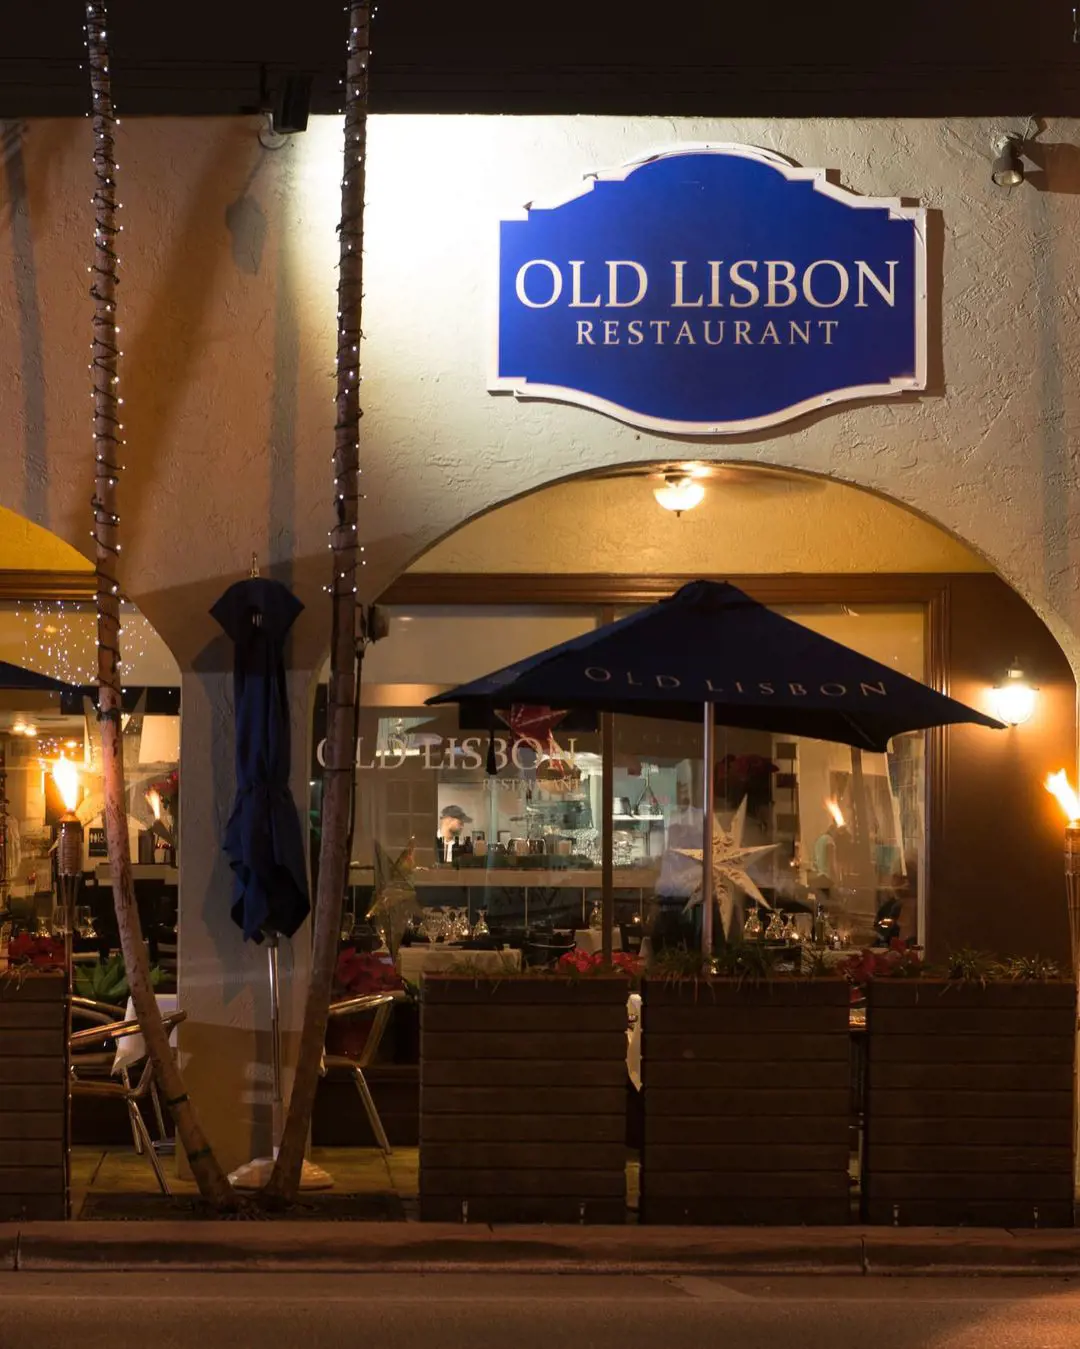 Old Lisbon Restaurant is one of the oldest restaurant